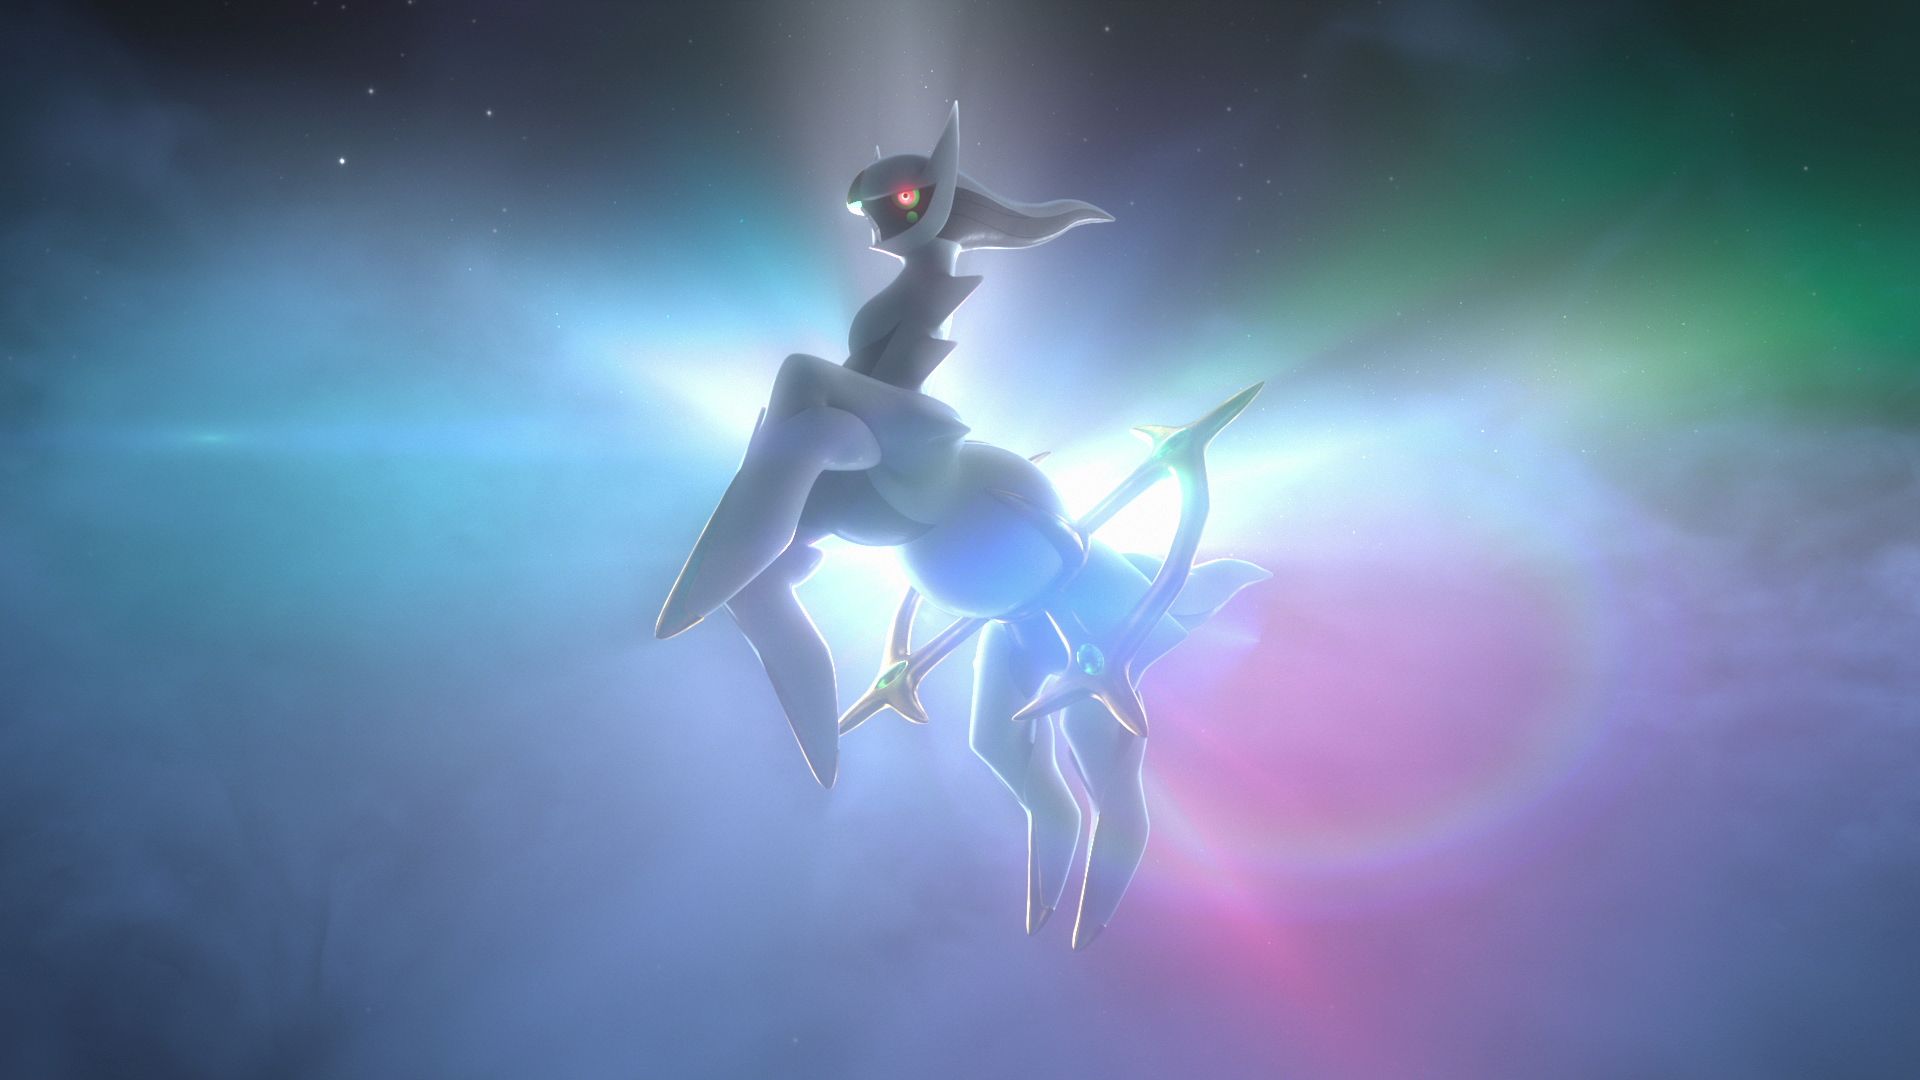 Pokémon Legends Arceus release date confirmed alongside special